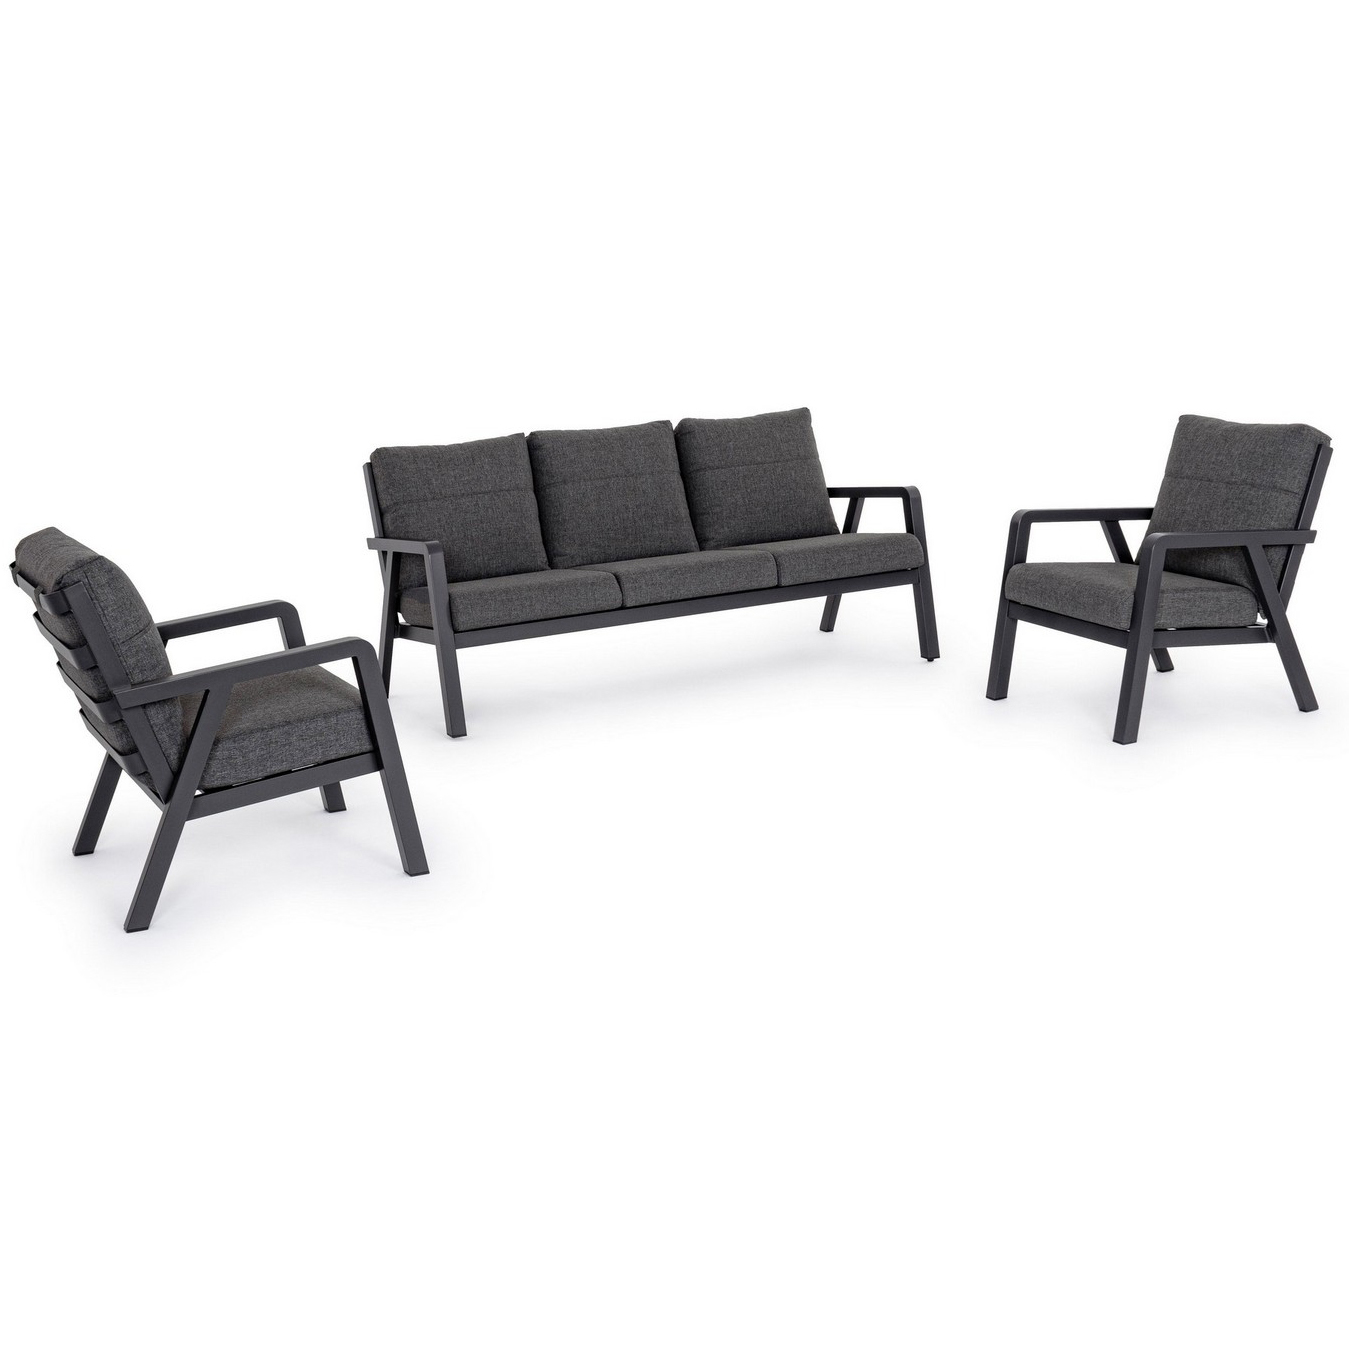 Комплект мебели Bizzotto Truman 3 предмета, цвет серый, размер 190х86х88 см